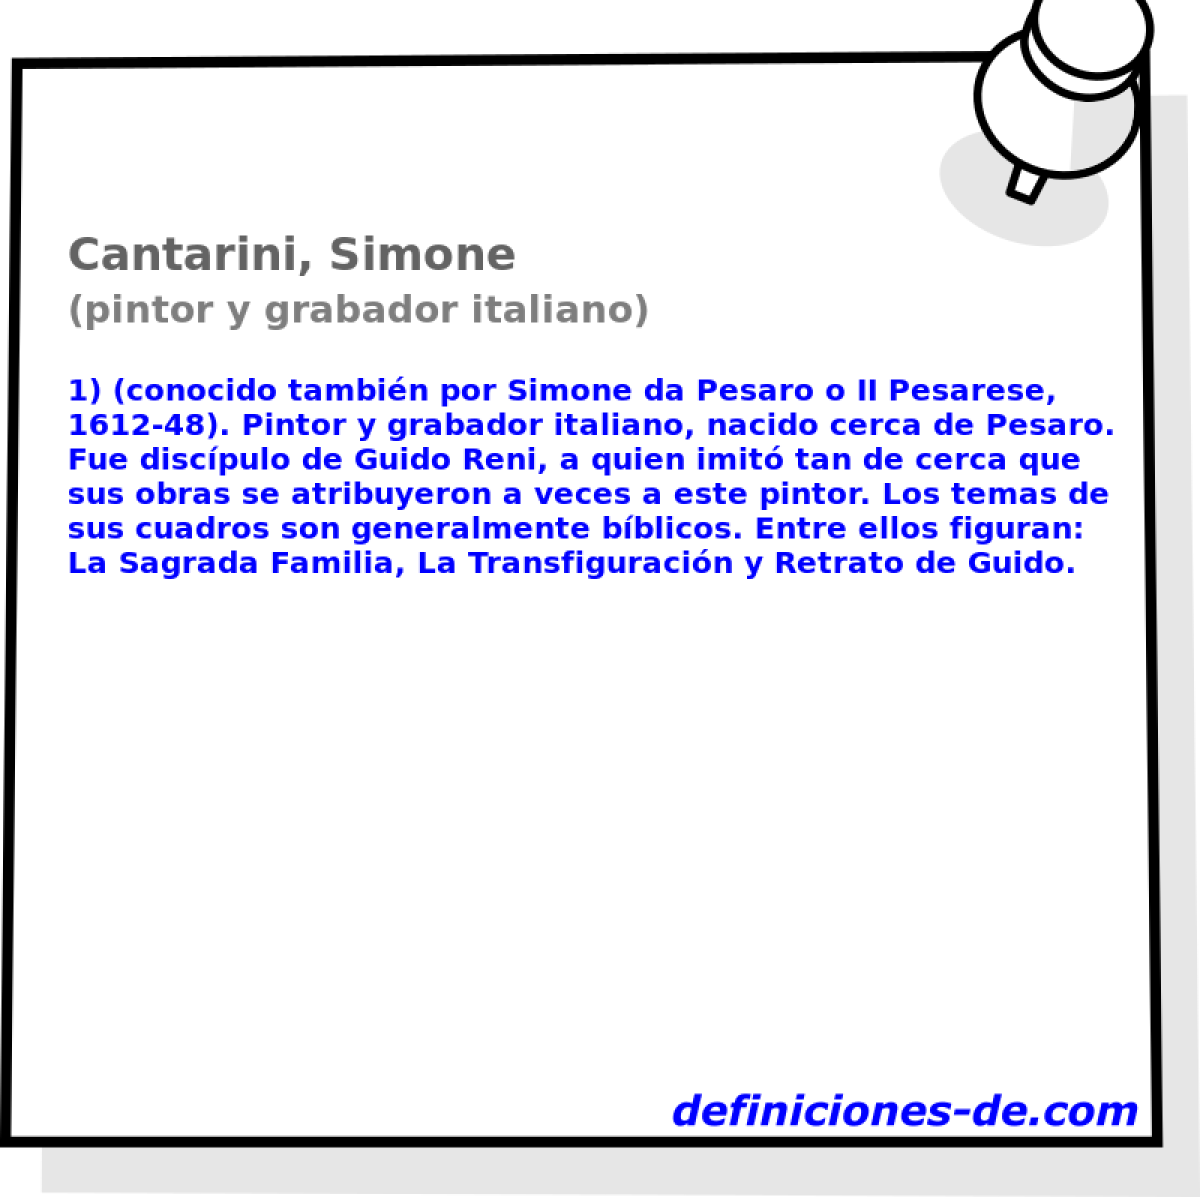 Cantarini, Simone (pintor y grabador italiano)